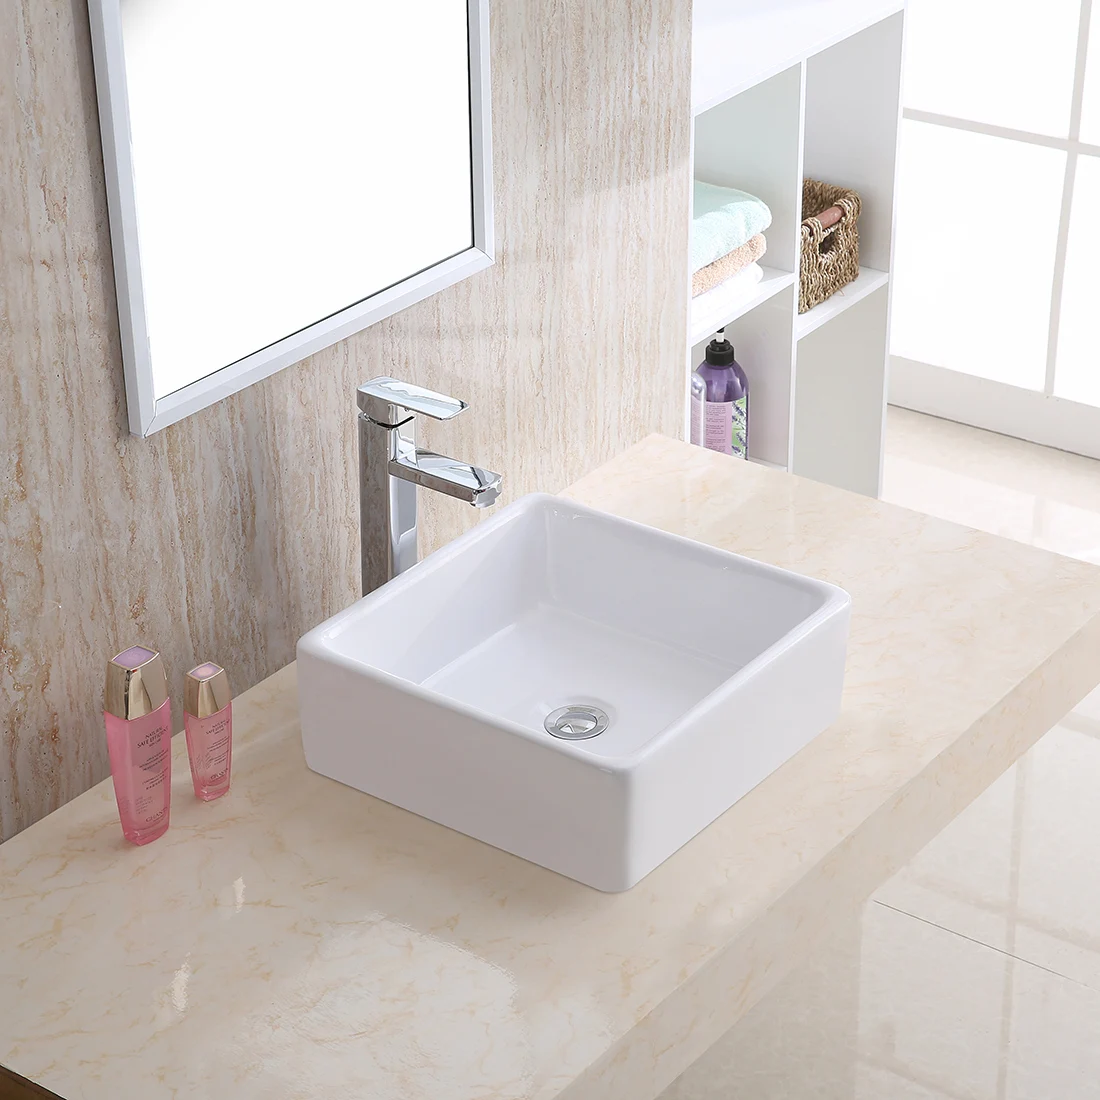 6061 Cheap Prices Square Shape Freestanding Small Vessel Sink Ceramic Bathroom Washbasin Buy Washbasin Bathroom Washbasin Ceramic Washbasin Product On Alibaba Com